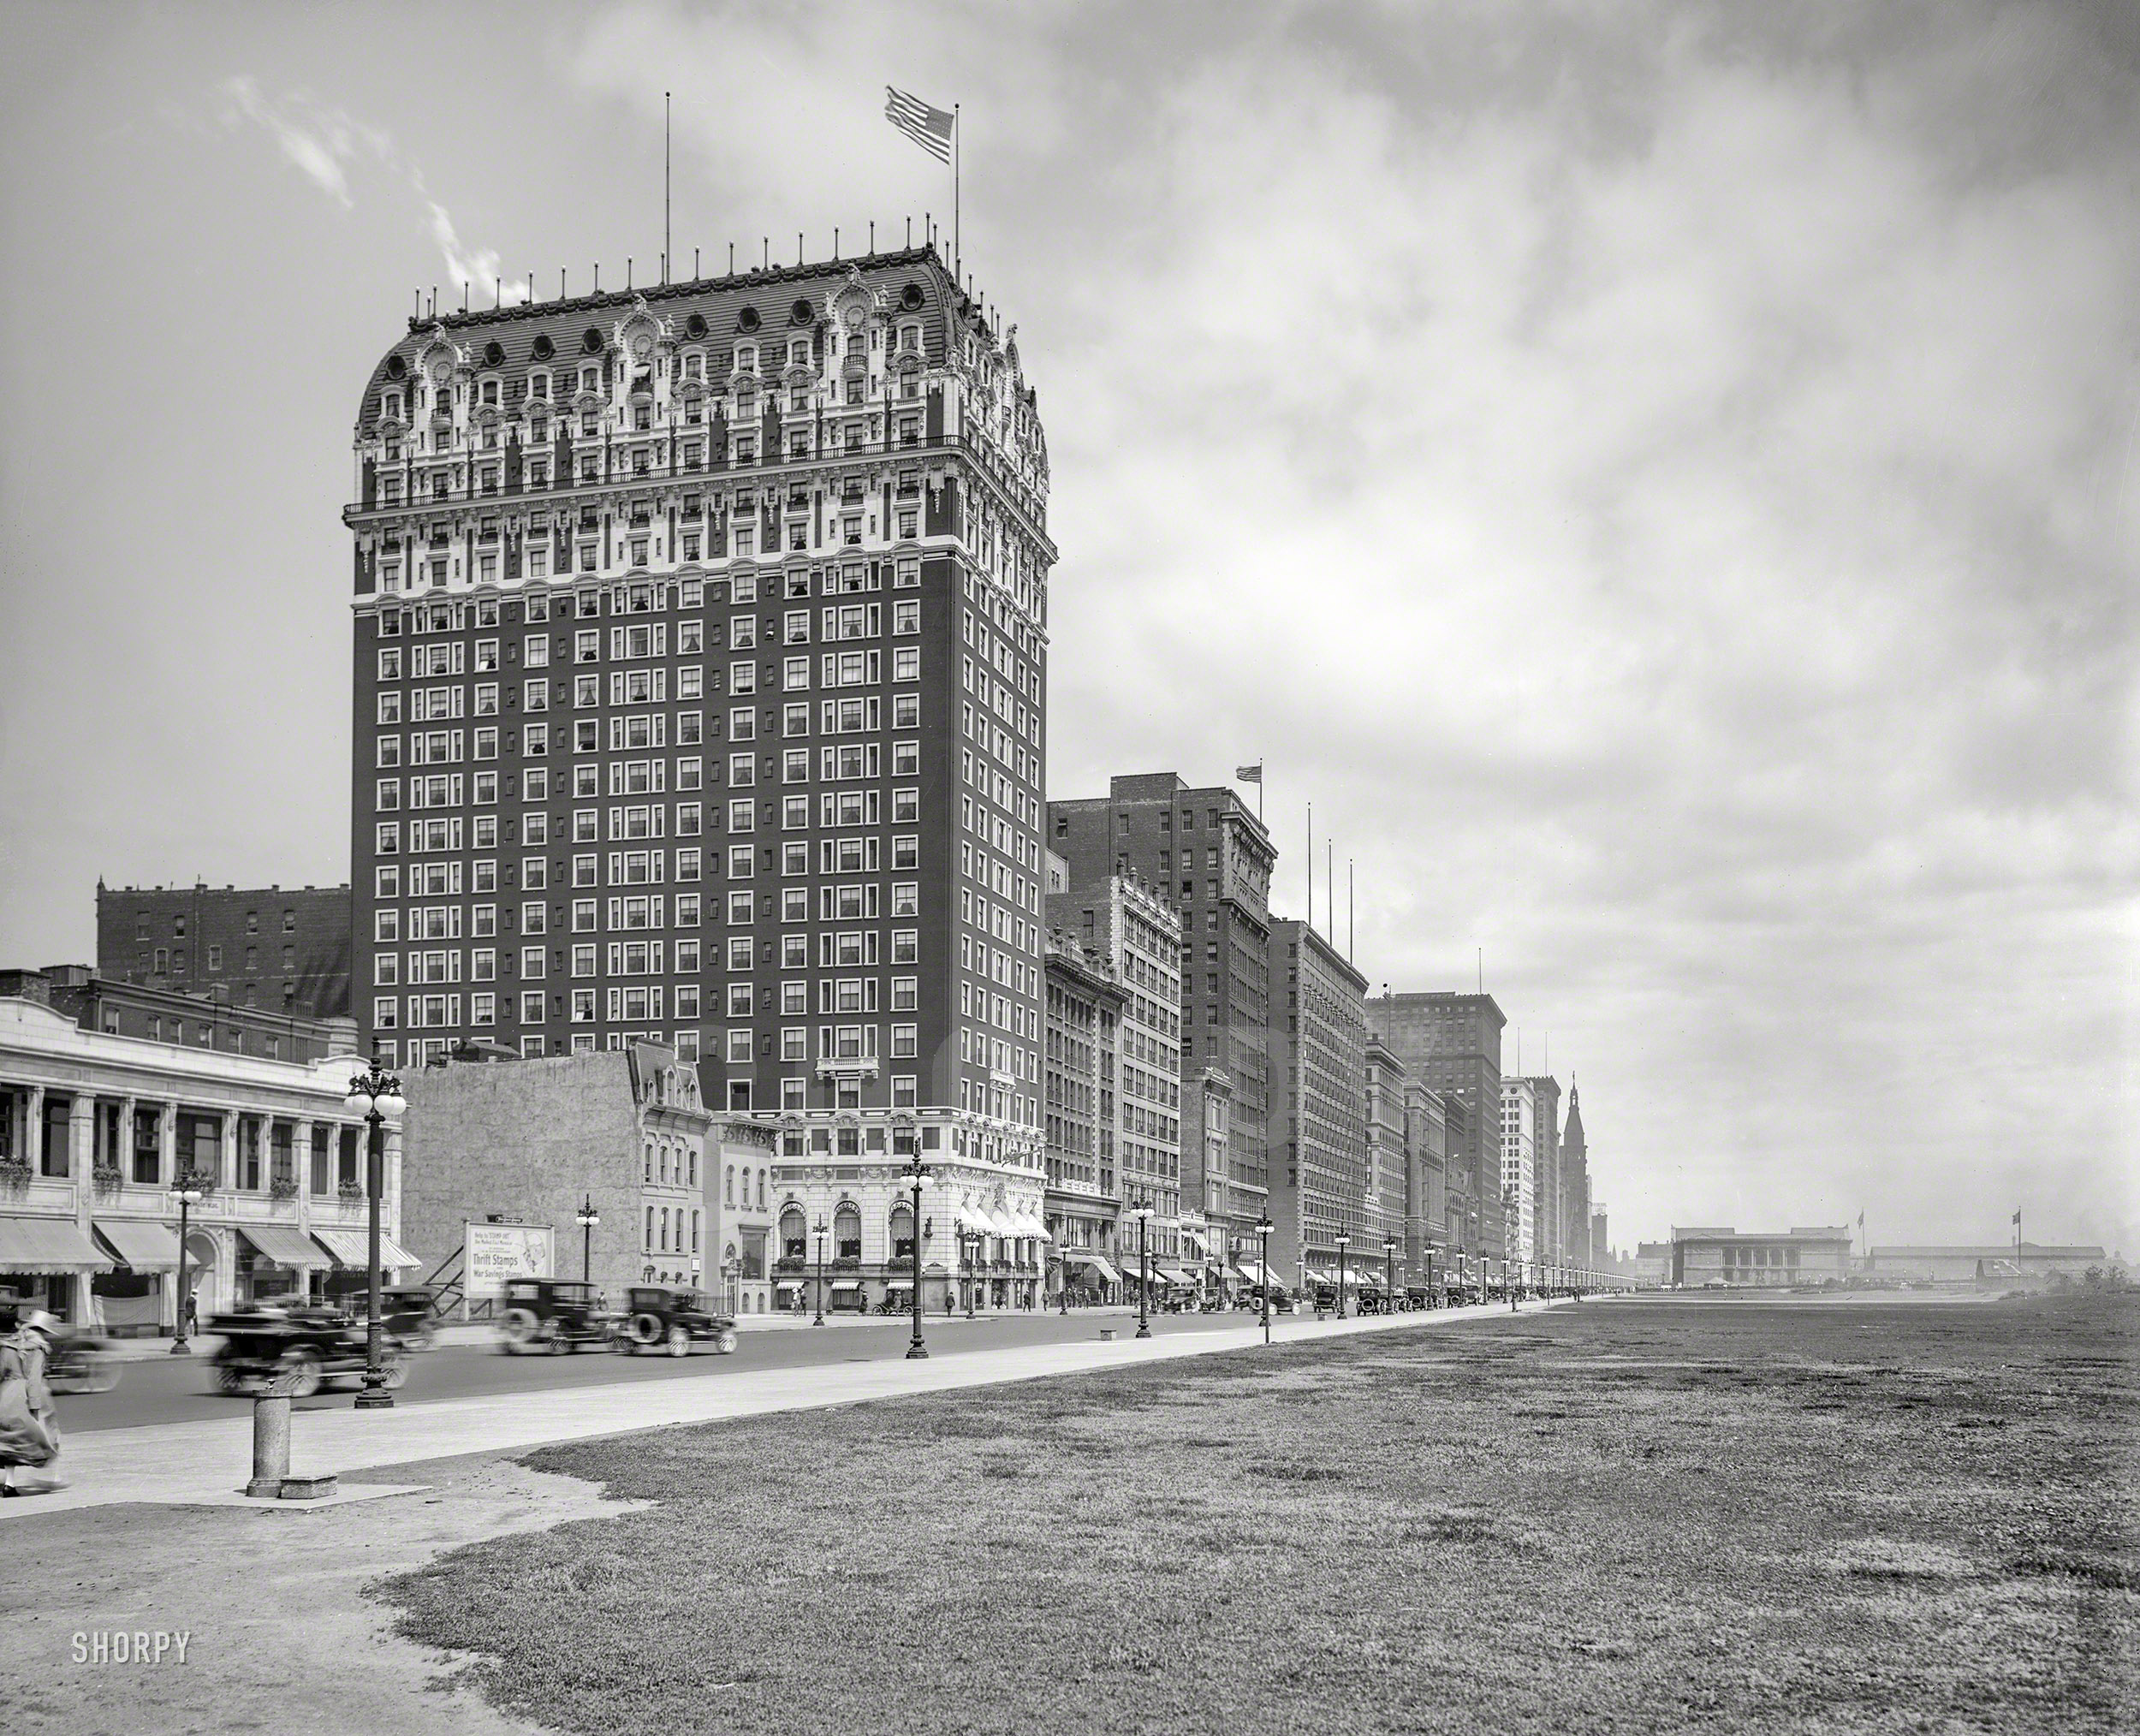 Chicago circa 1918. "Michigan Avenue -- Blackstone Hotel and Grant Park." 8x10 inch dry plate glass negative, Detroit Publishing Company. View full size.